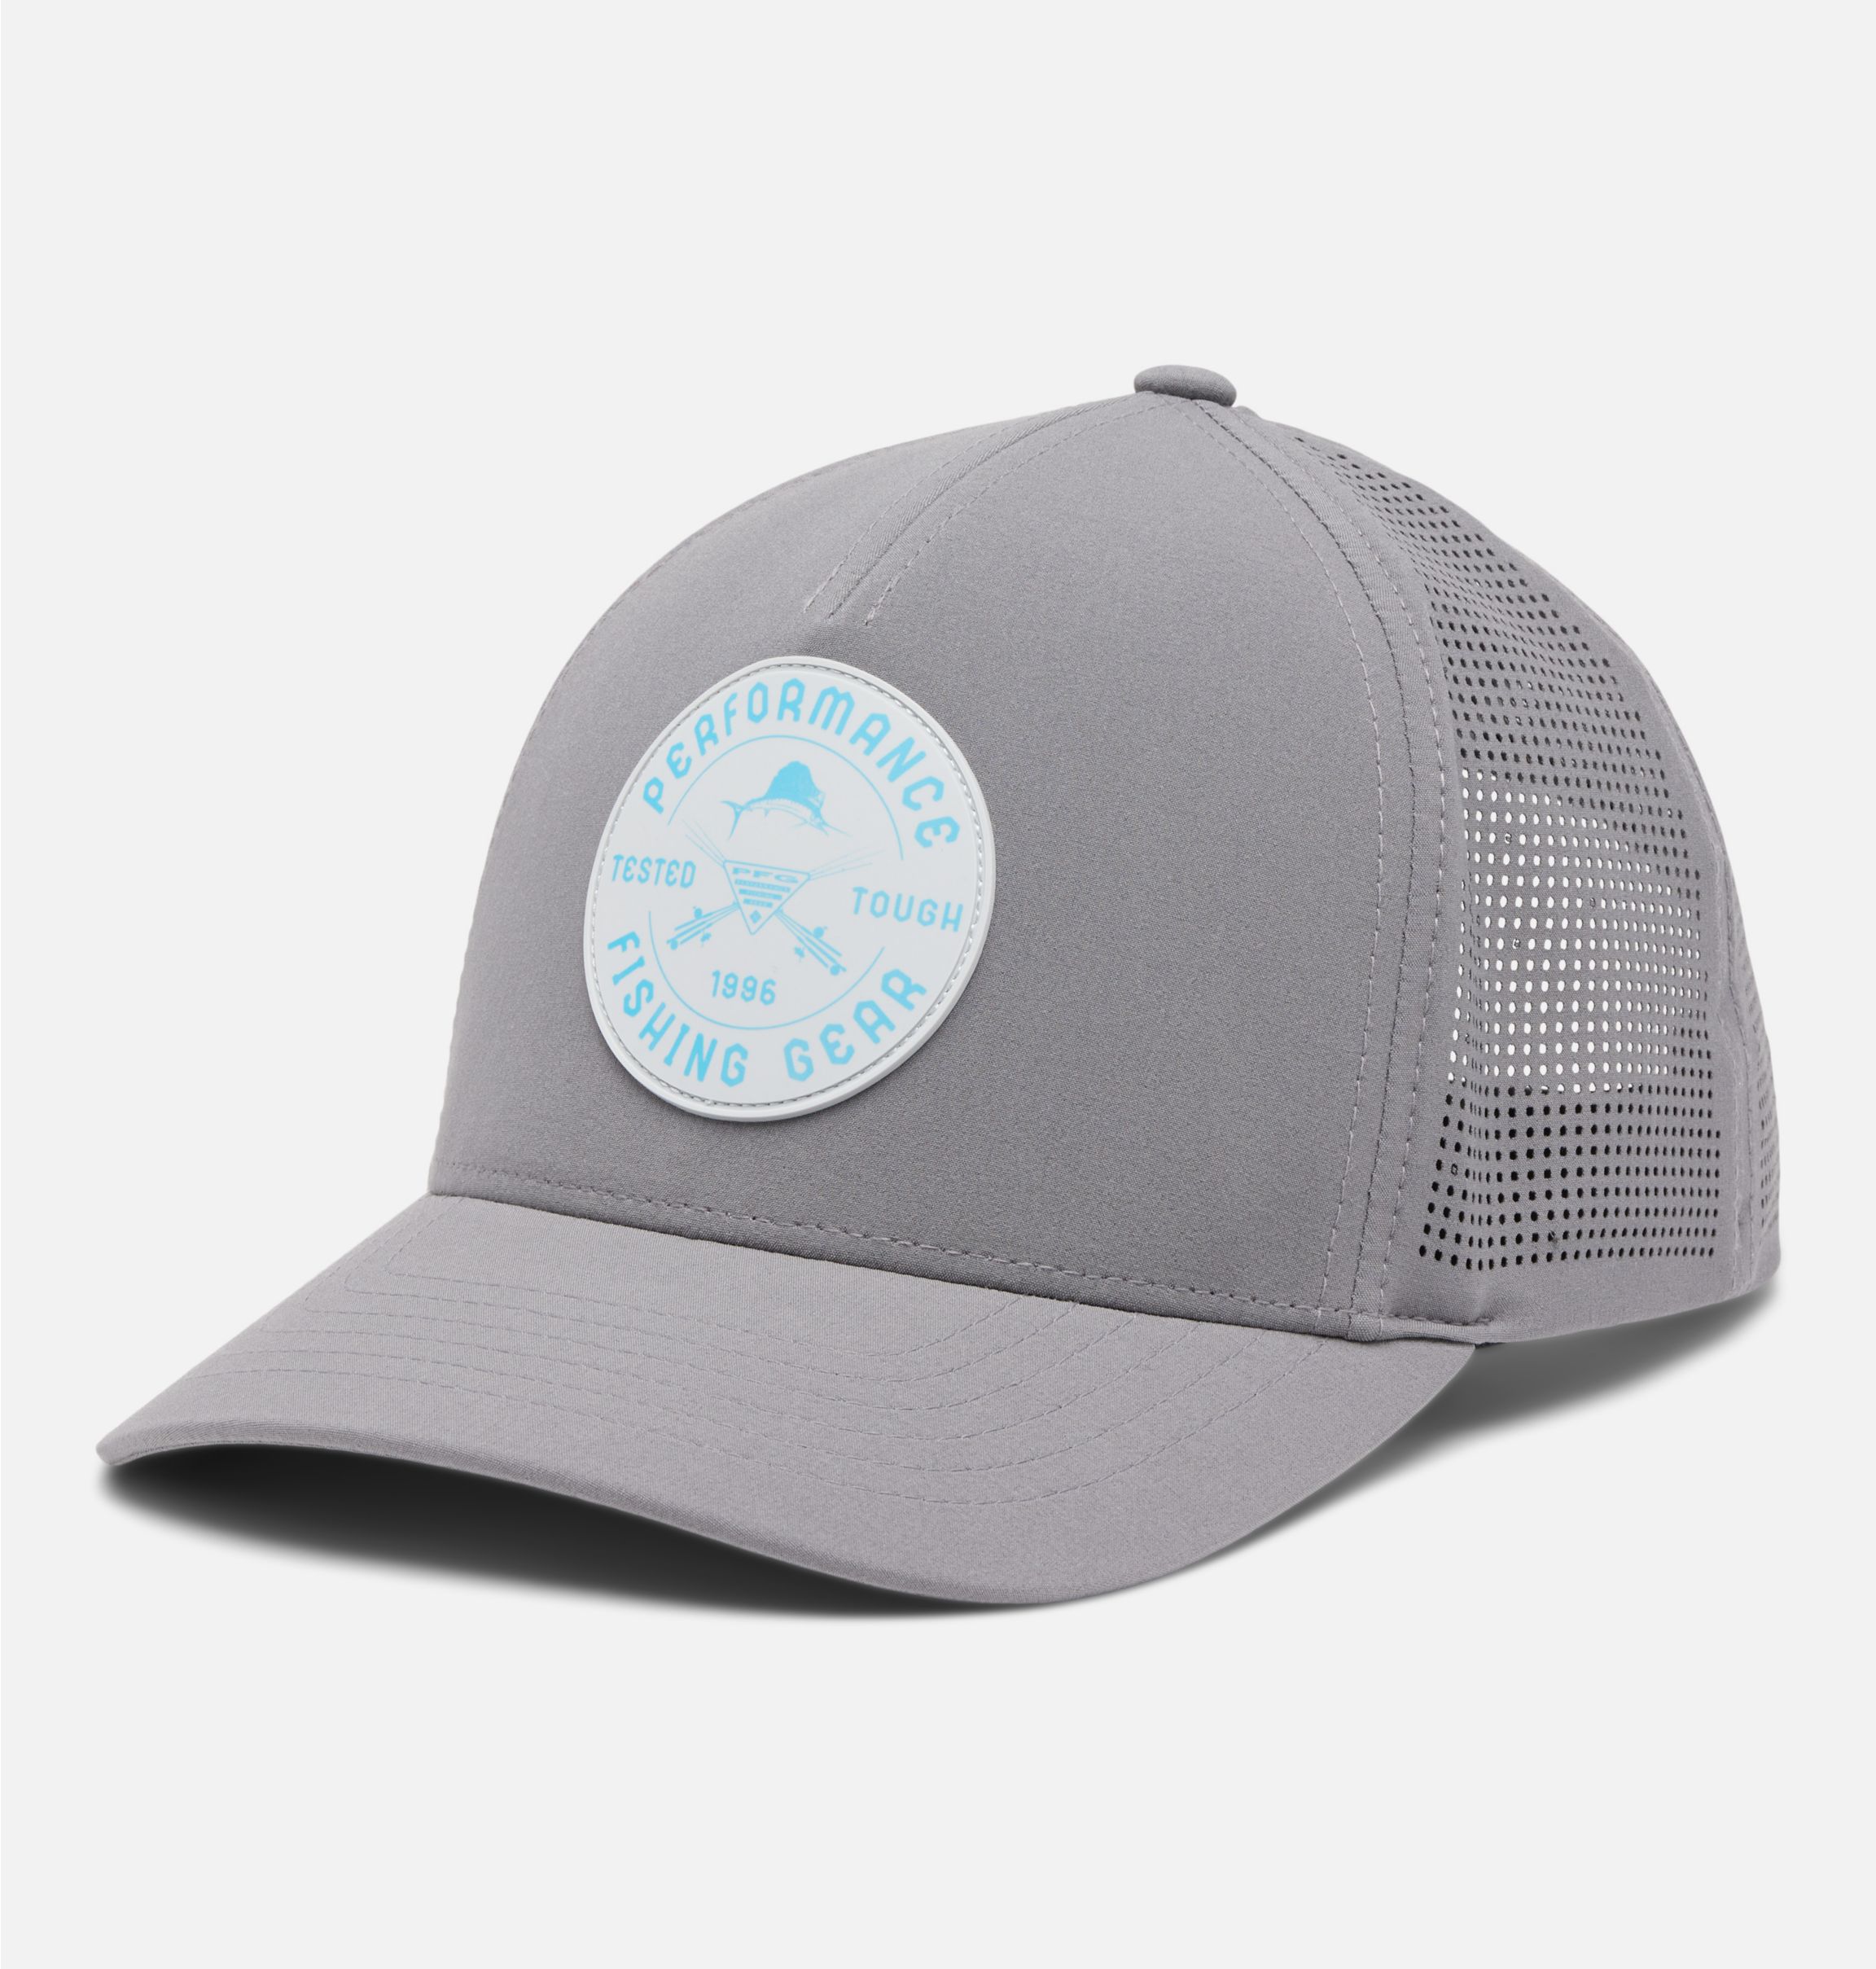 Columbia Men's PFG Elite 110 Snapback Hat, City Grey Tested Tough